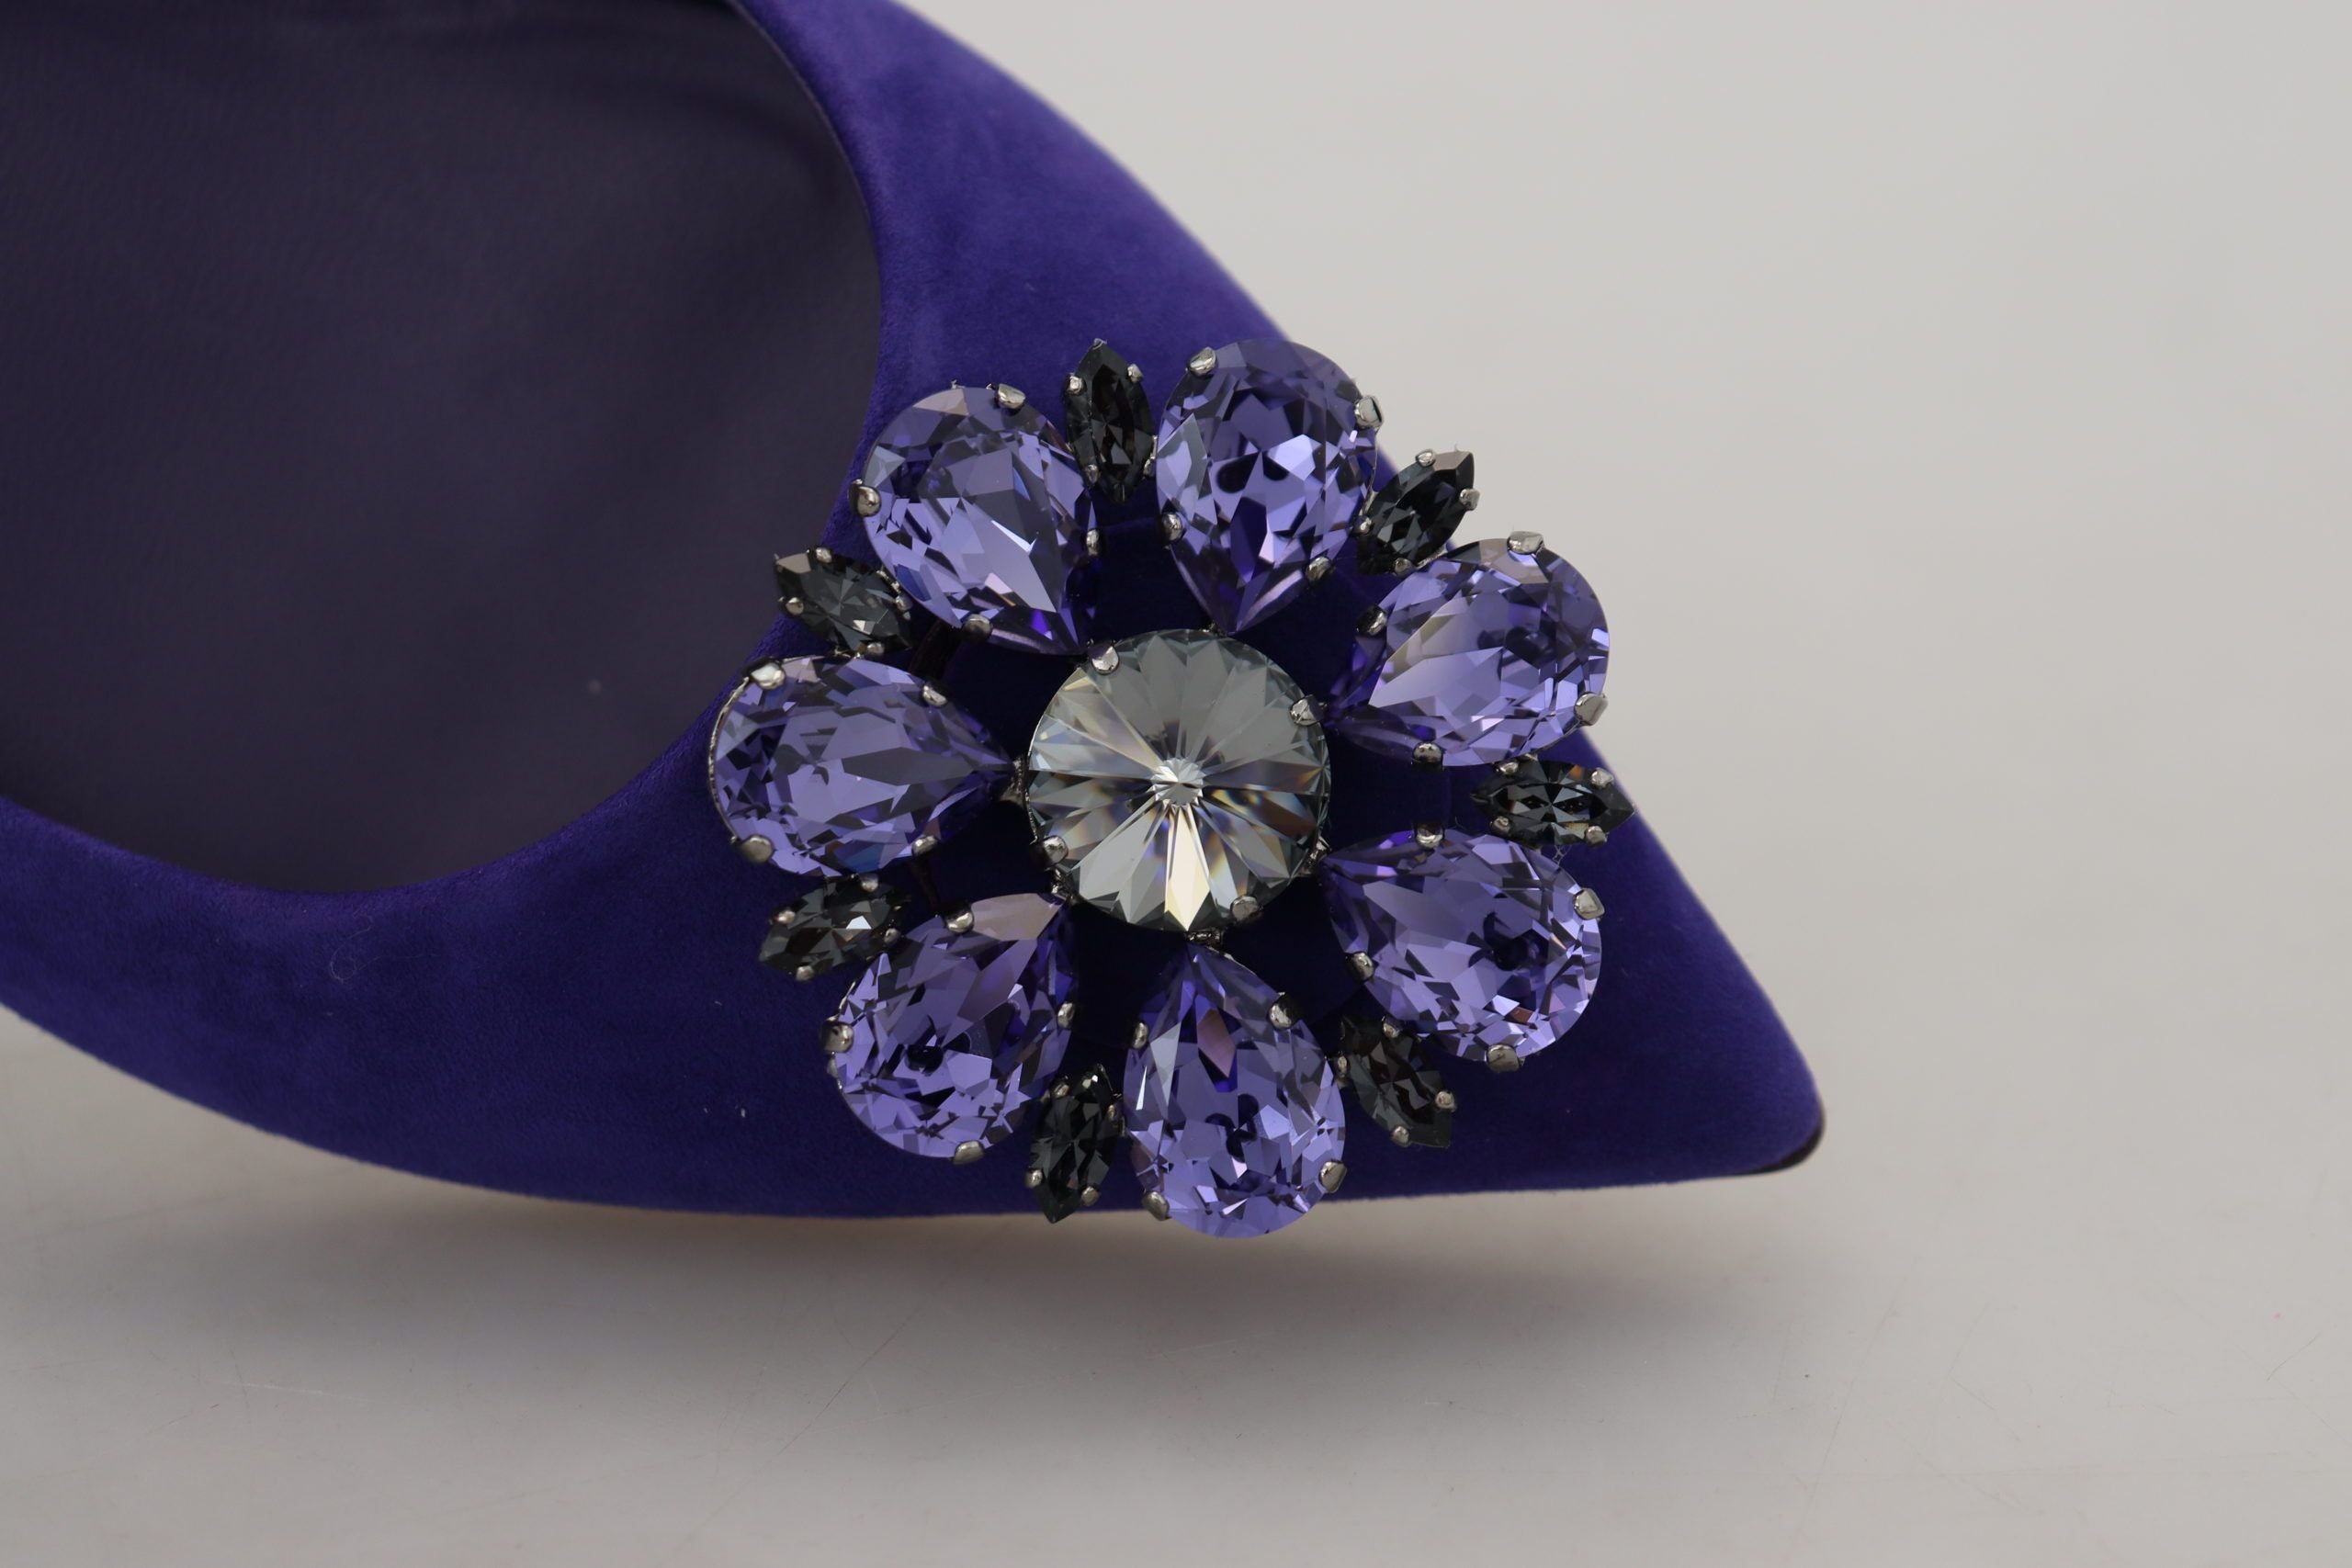 Dolce & Gabbana Embellished Crystal Purple Suede Flats